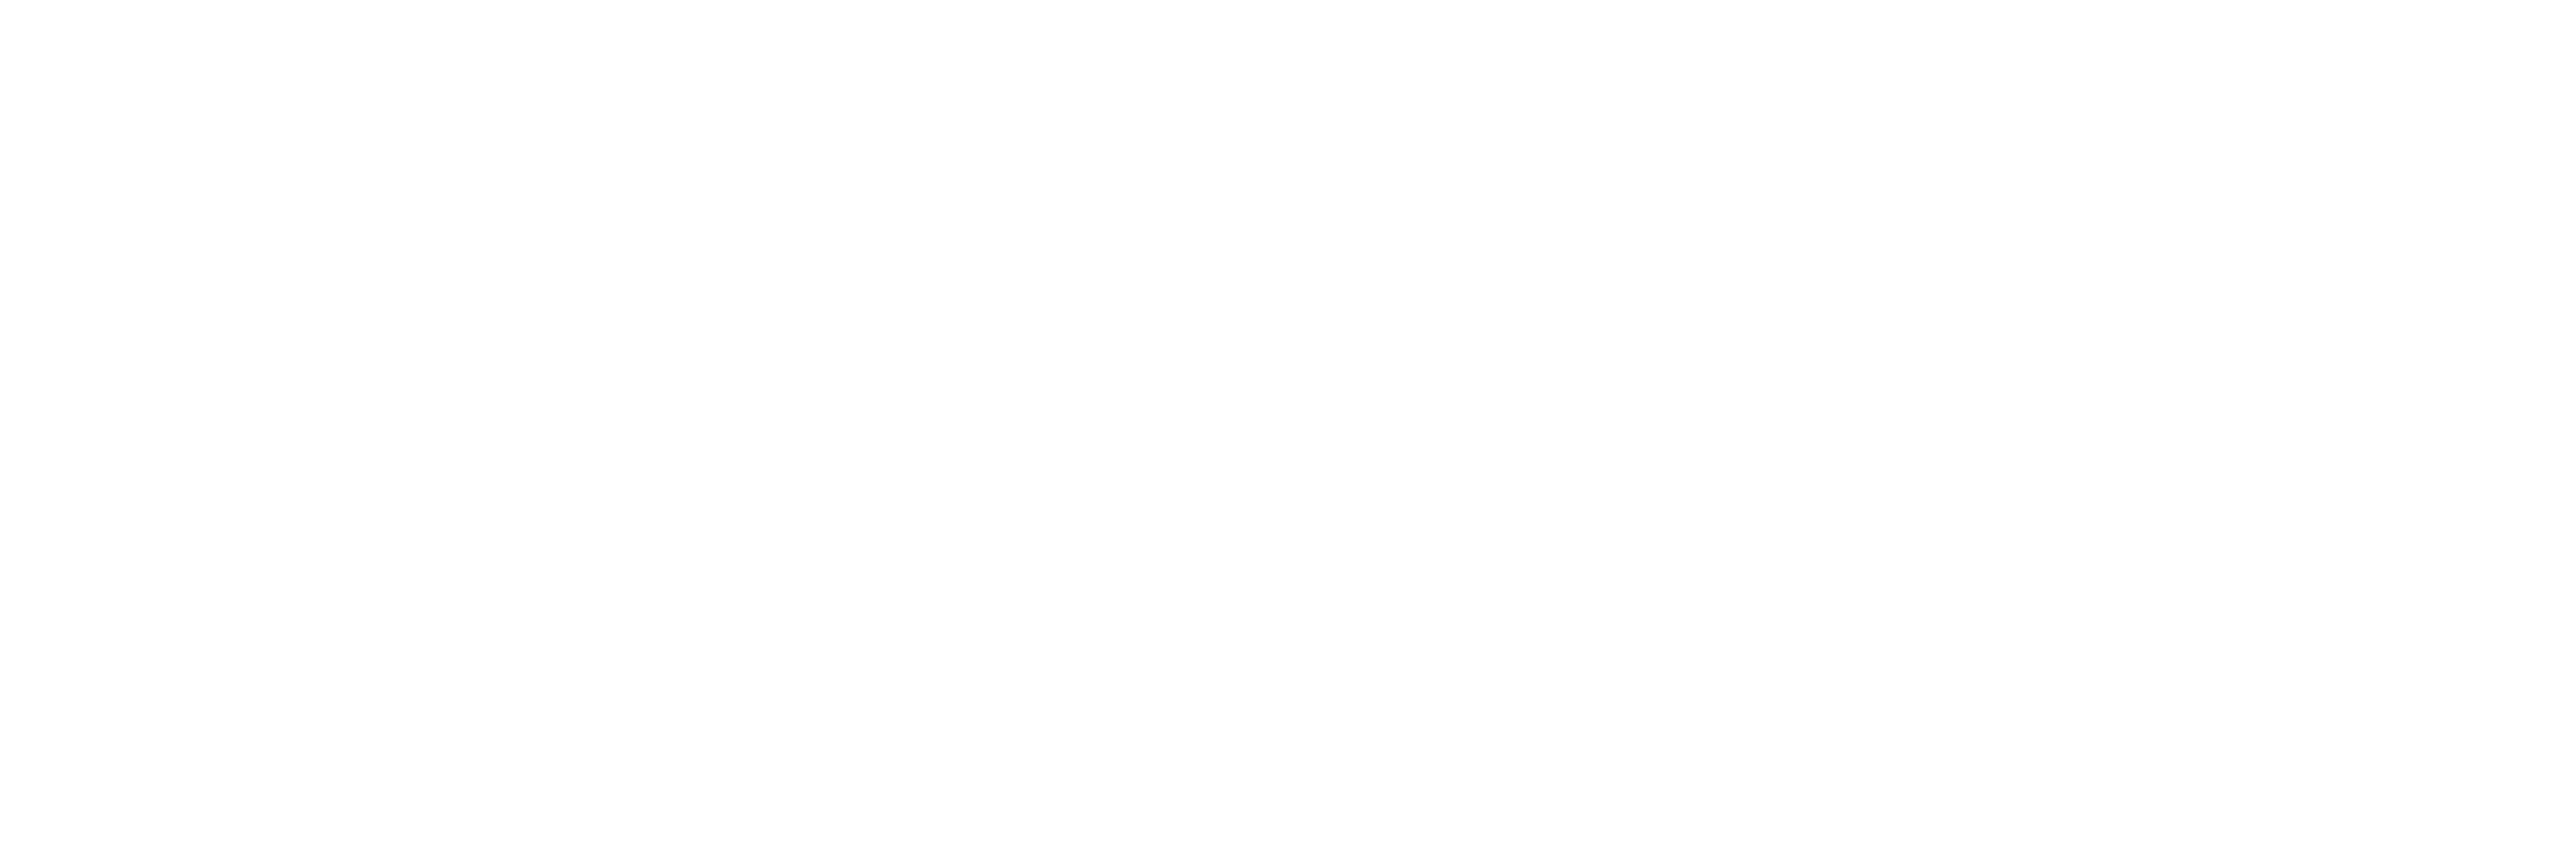 widya wicara logo